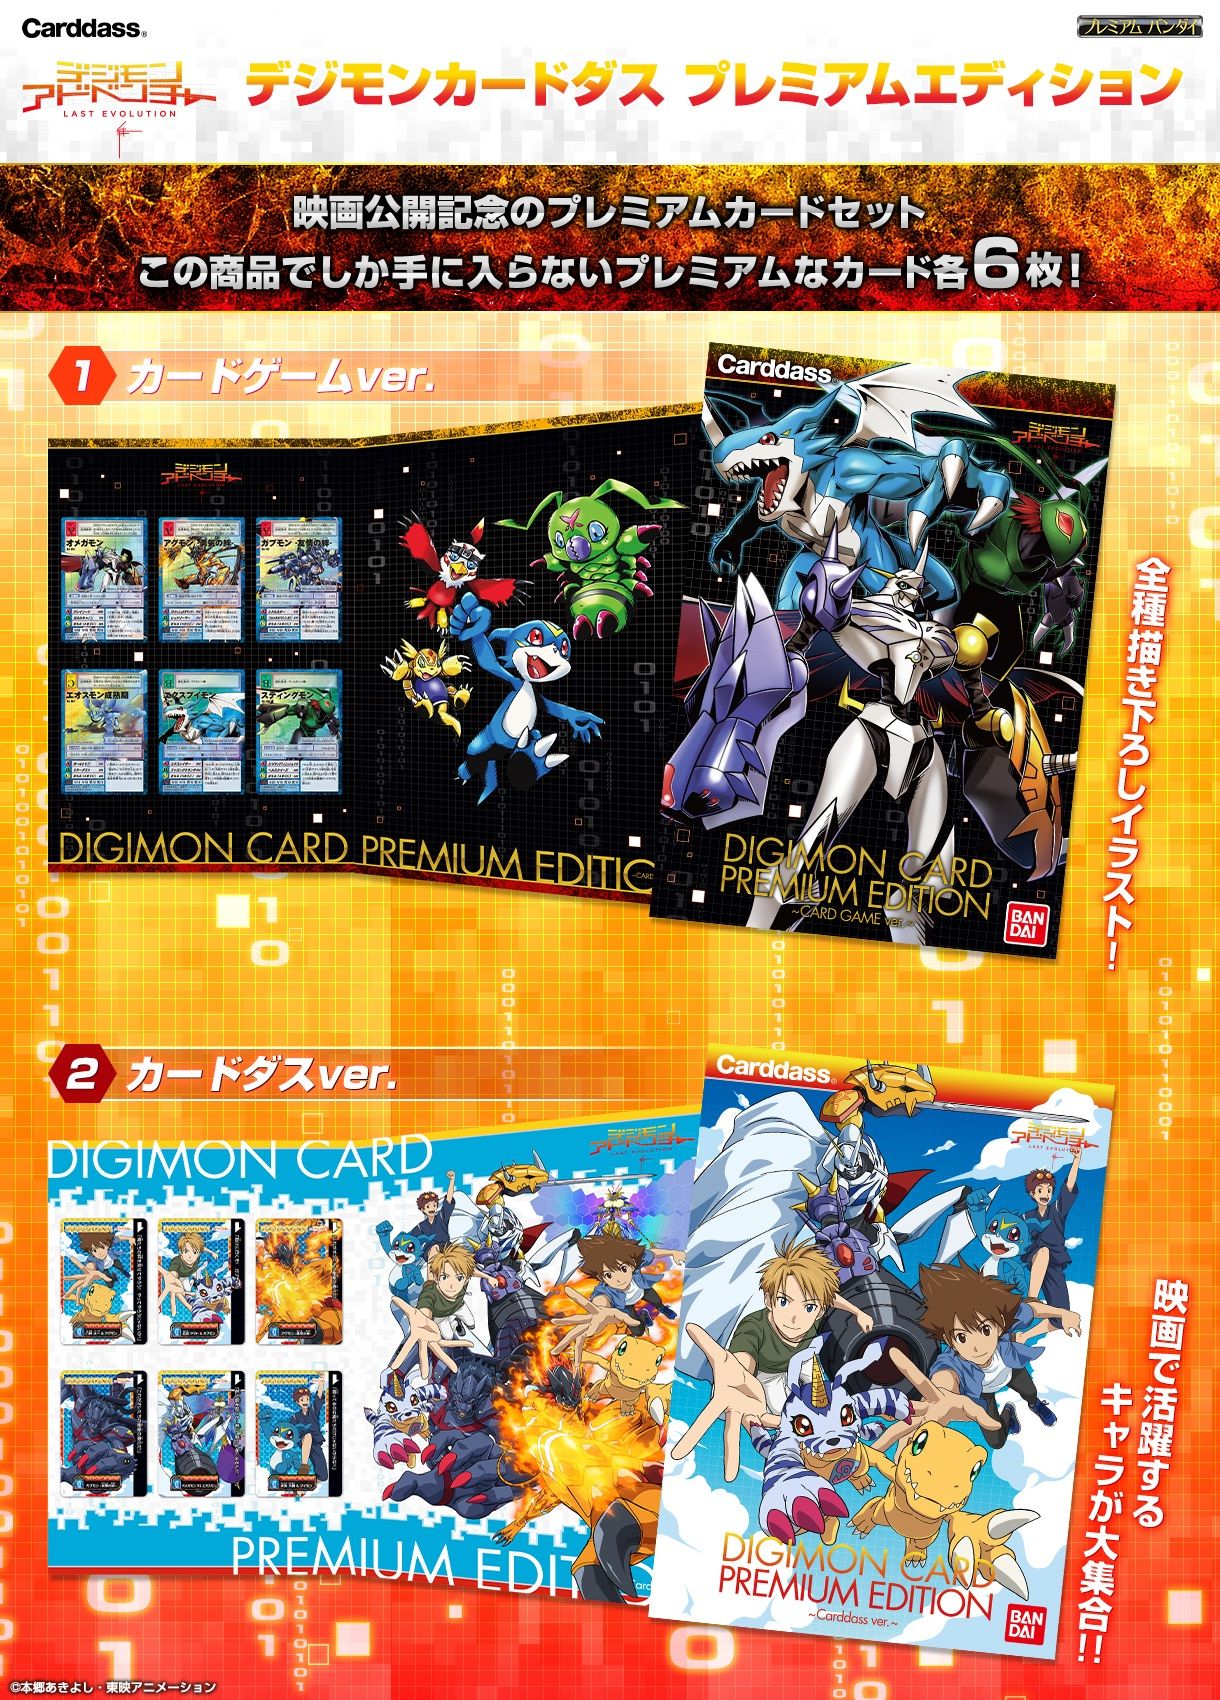 NEW Digimon Adventure LAST EVOLUTION Kizuna Digimon Card Premium Edition 2 set 